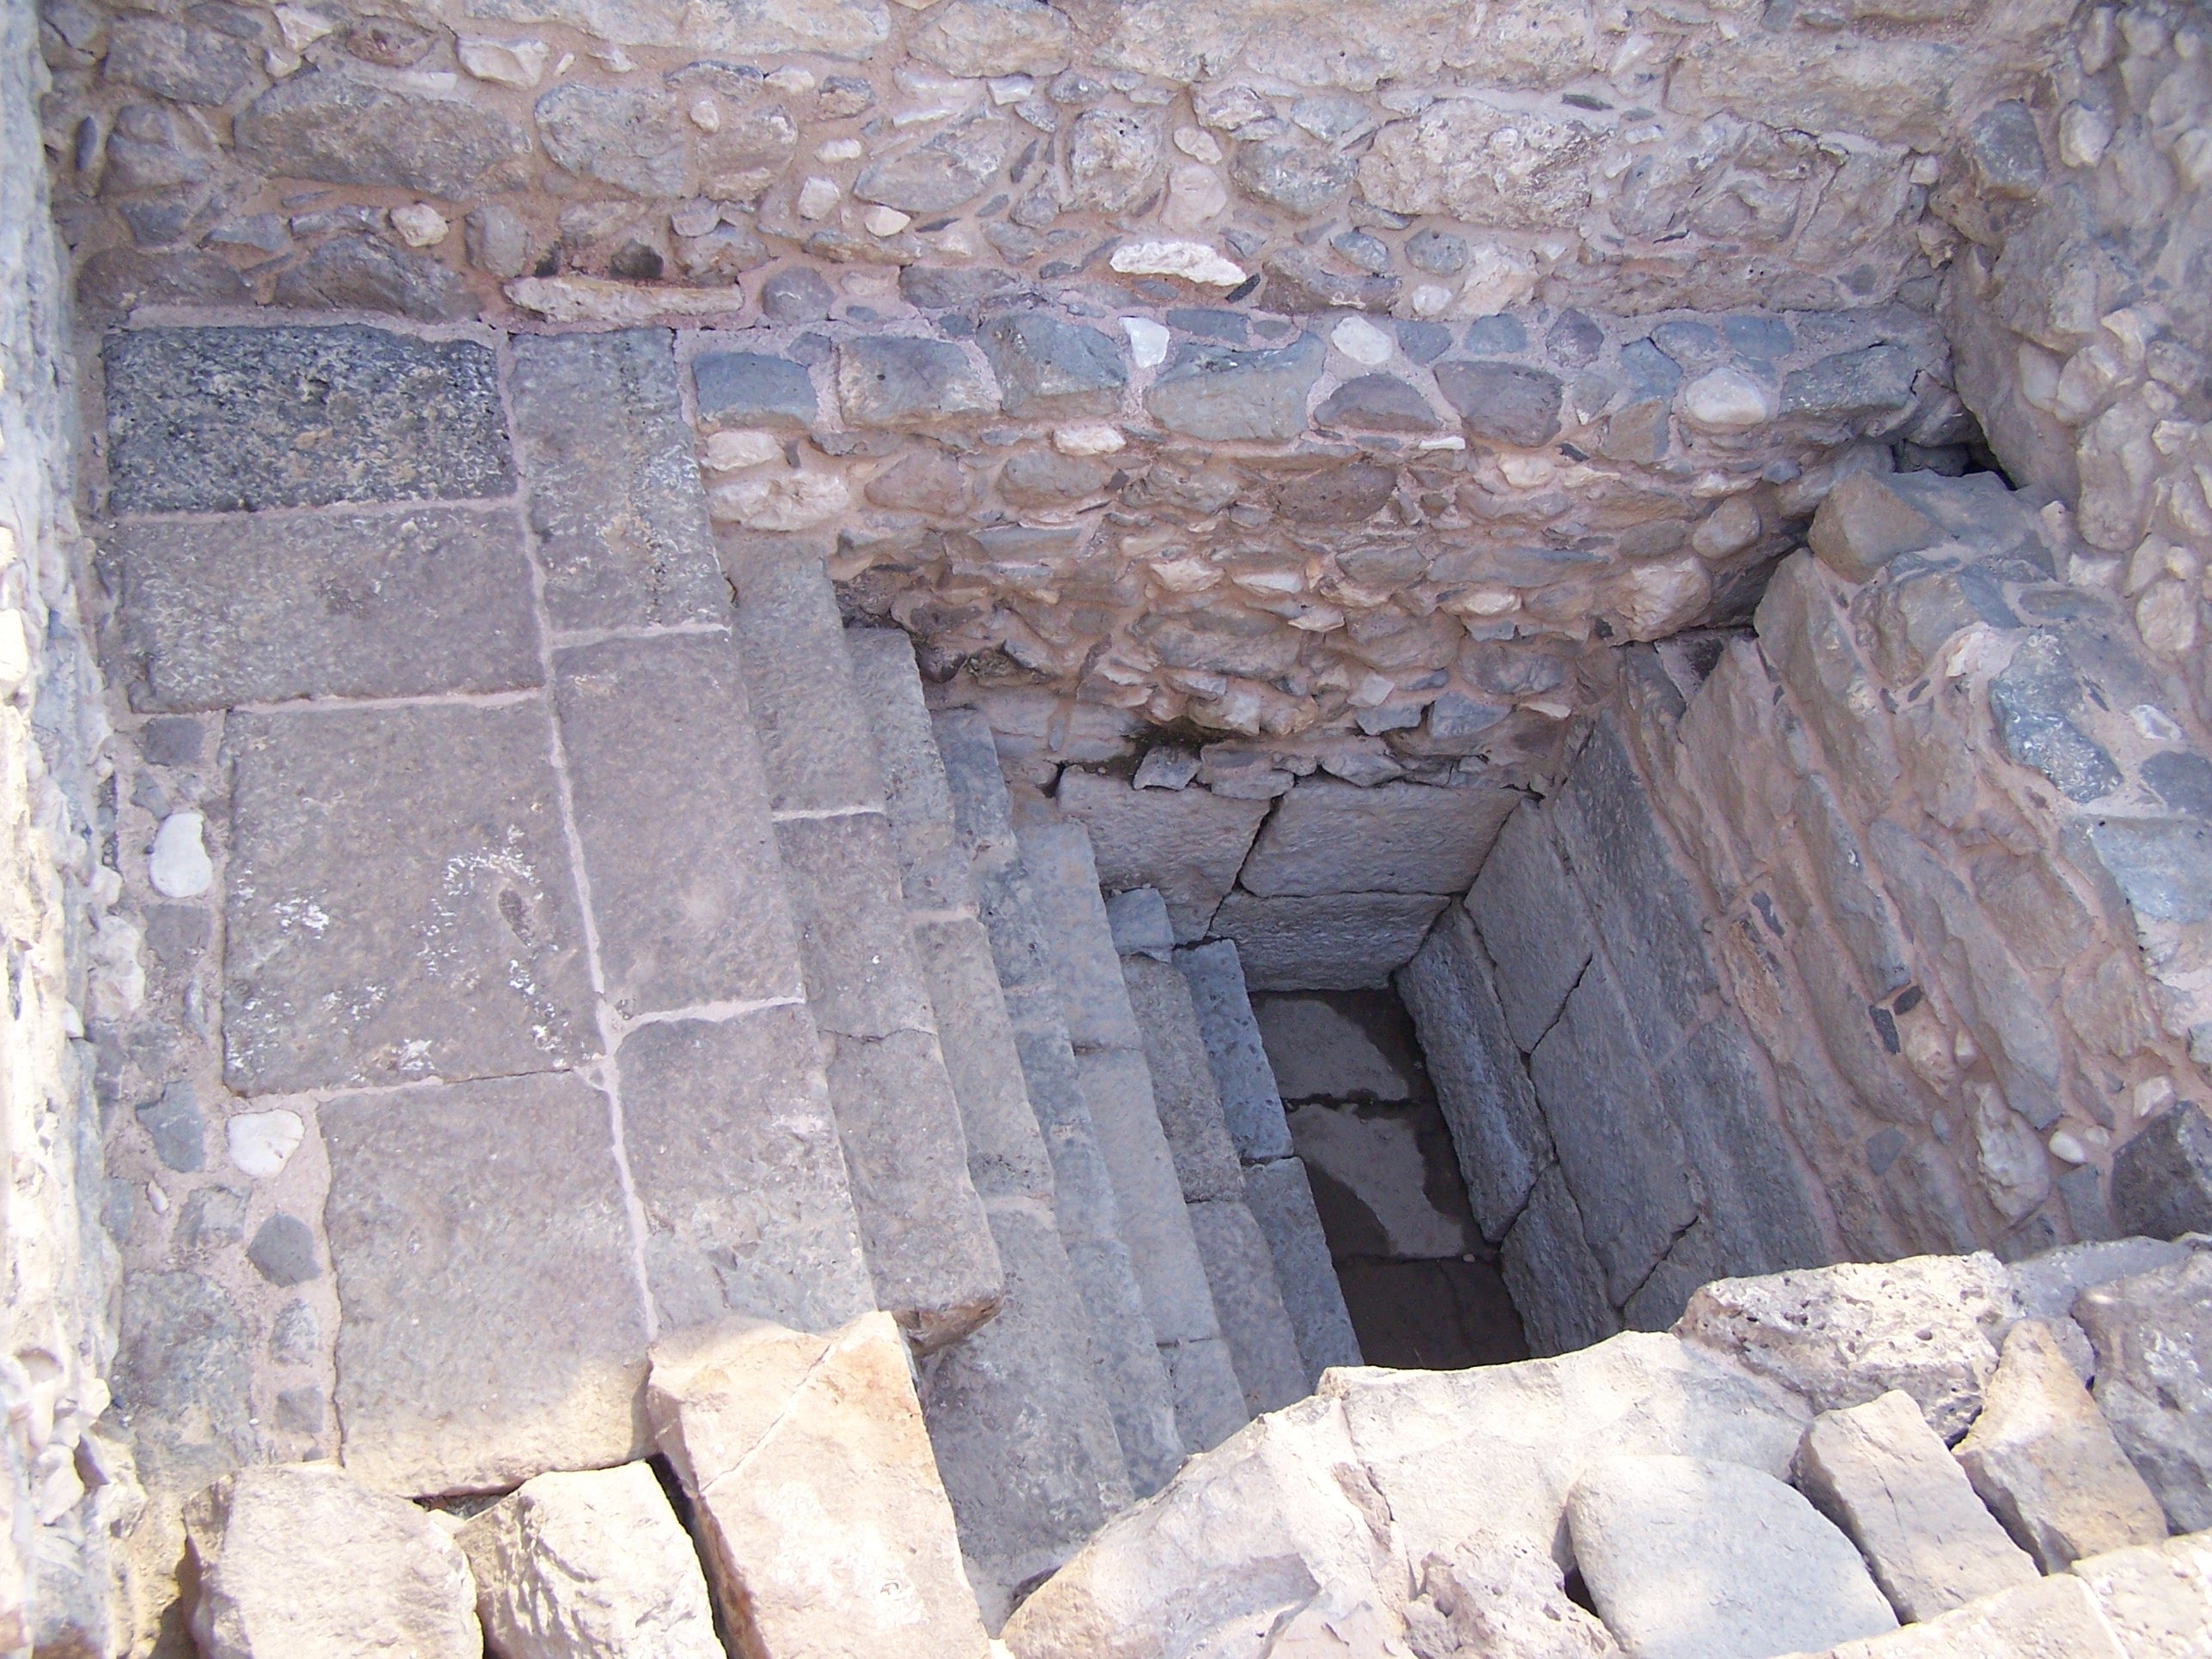 A ritual immersion bath (mikveh) discovered at Magdala. Photo courtesy of Joshua N. Tilton.